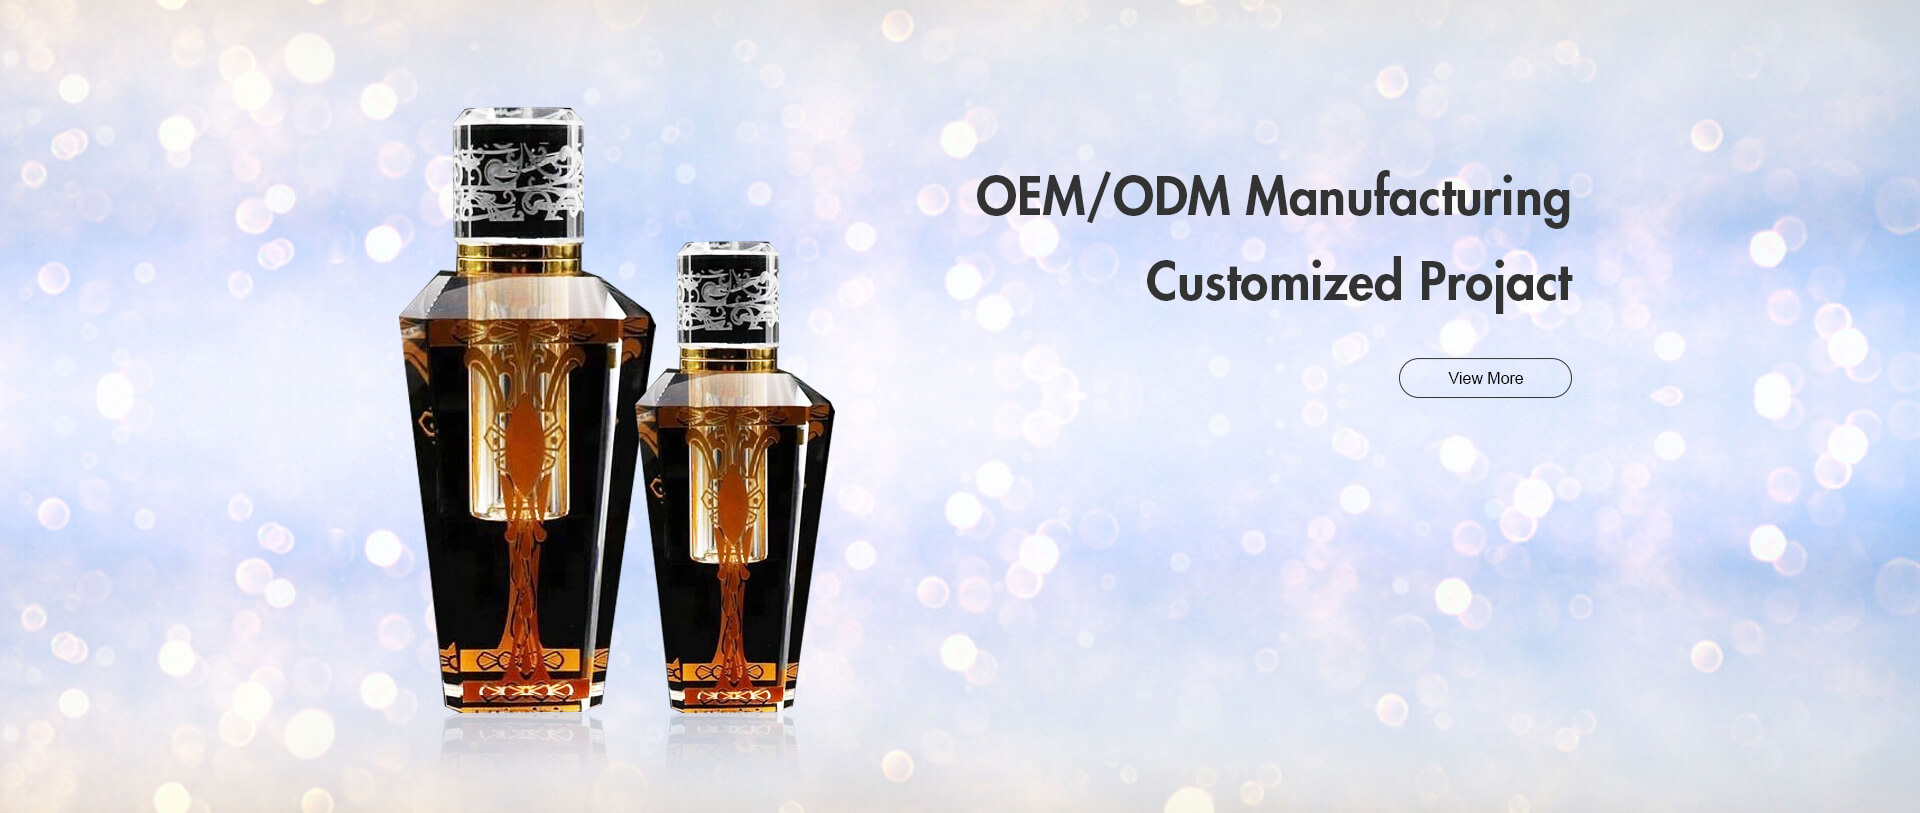 OEM/ODM Manufacturing